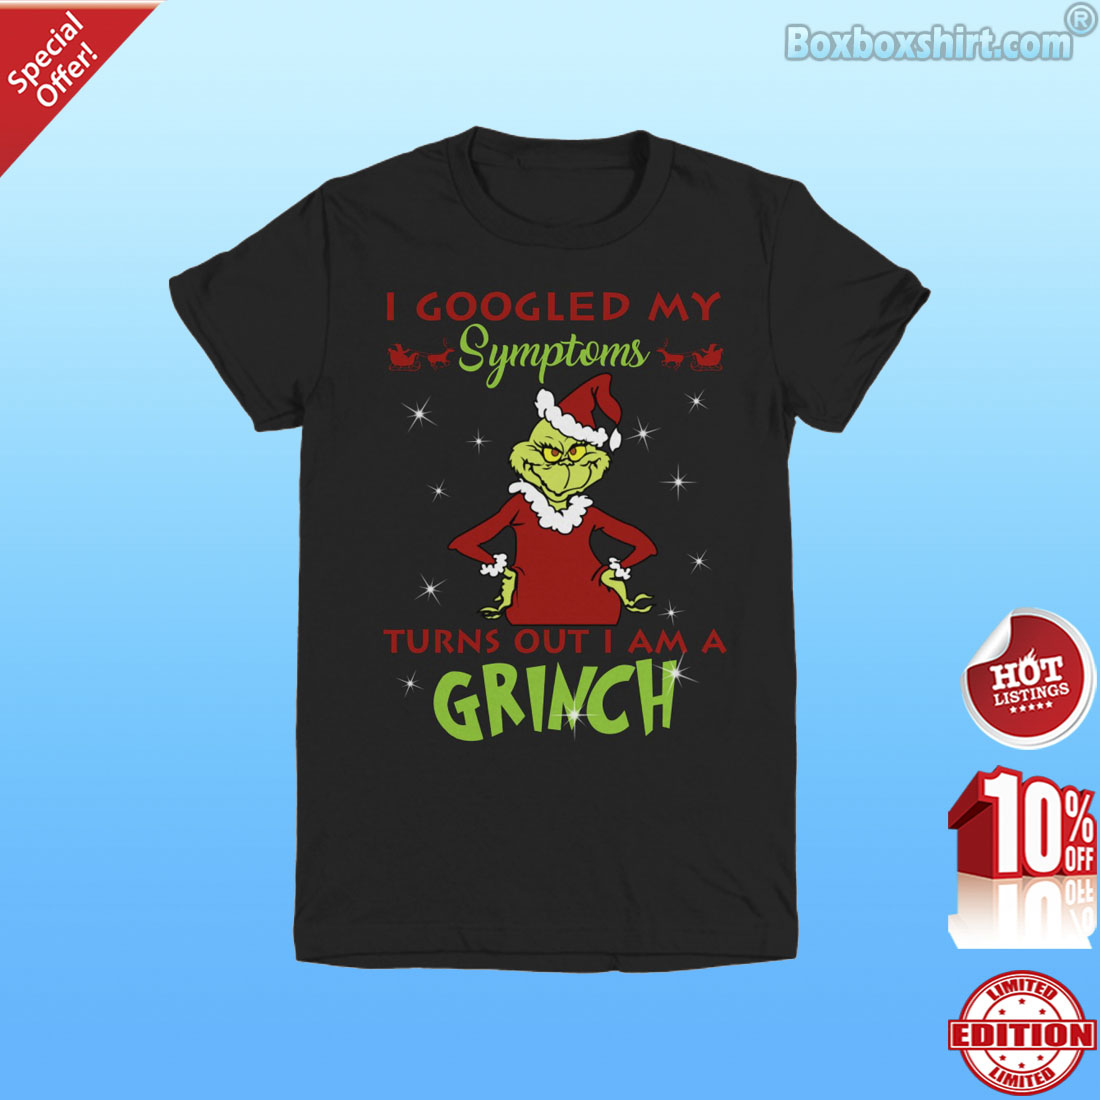 I googled my symptoms turns out I am a Grinch shirt